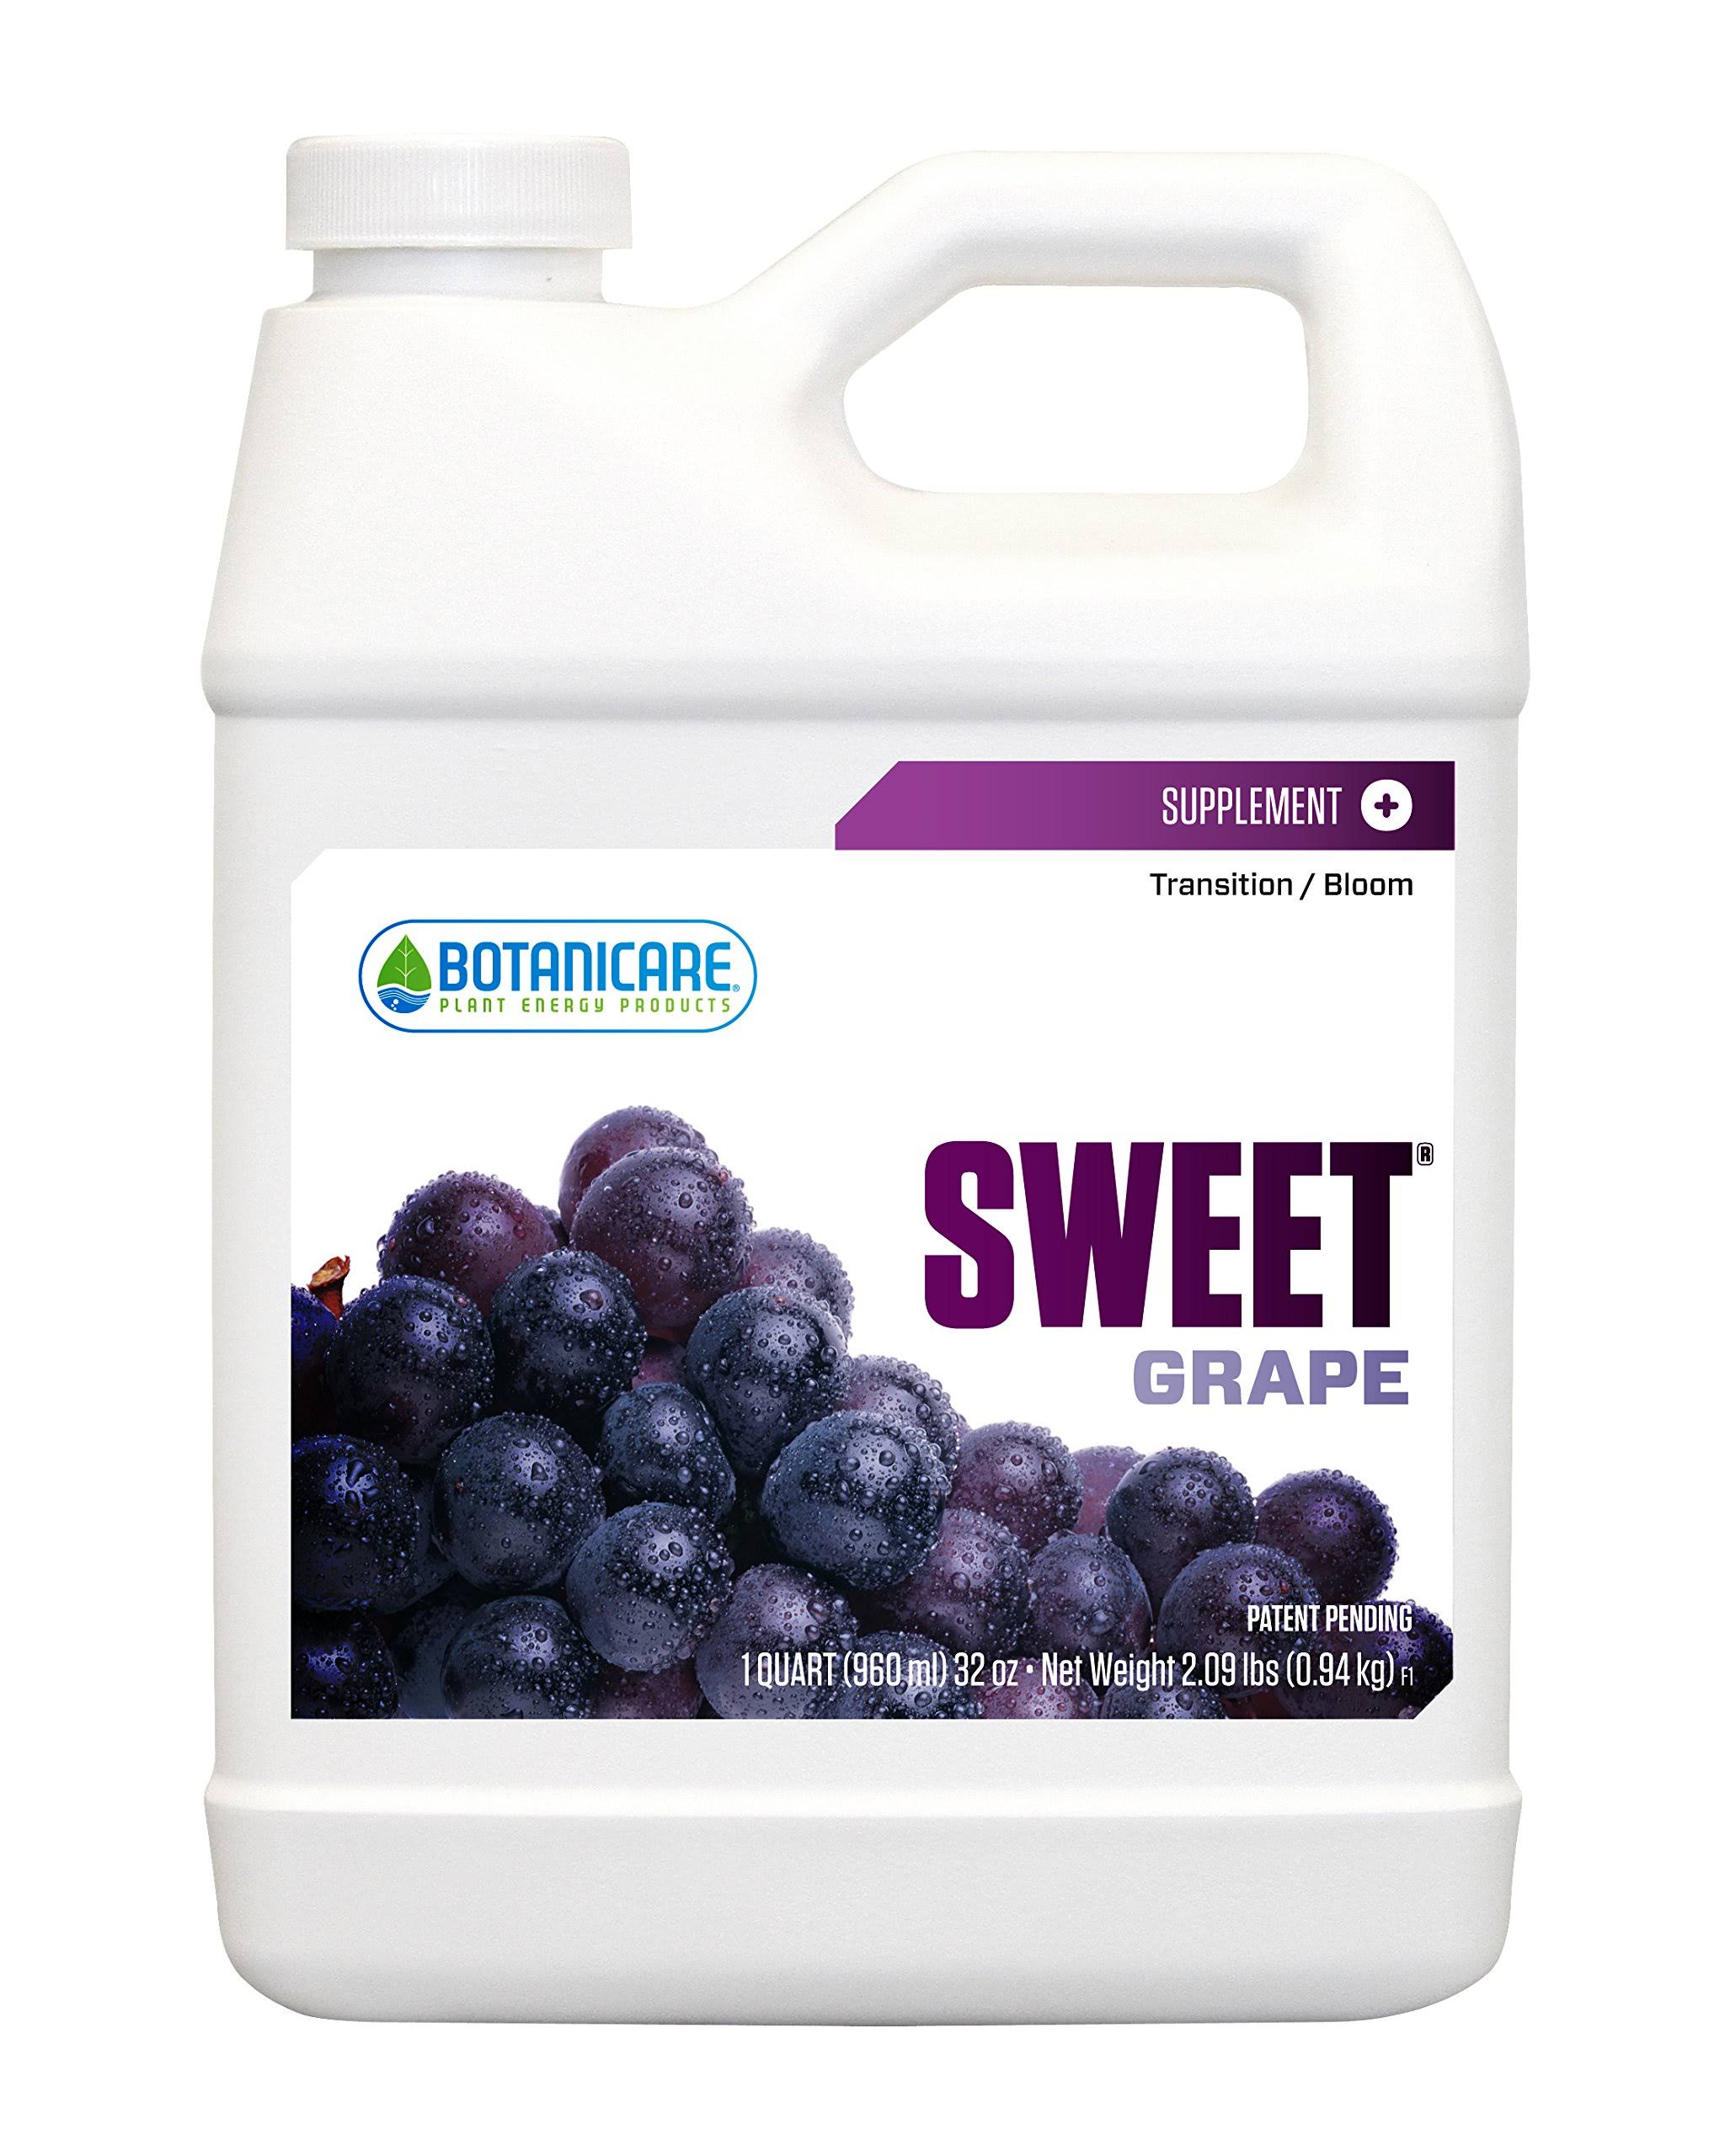 Botanicare Sweet Grape Mineral Supplement - 32oz